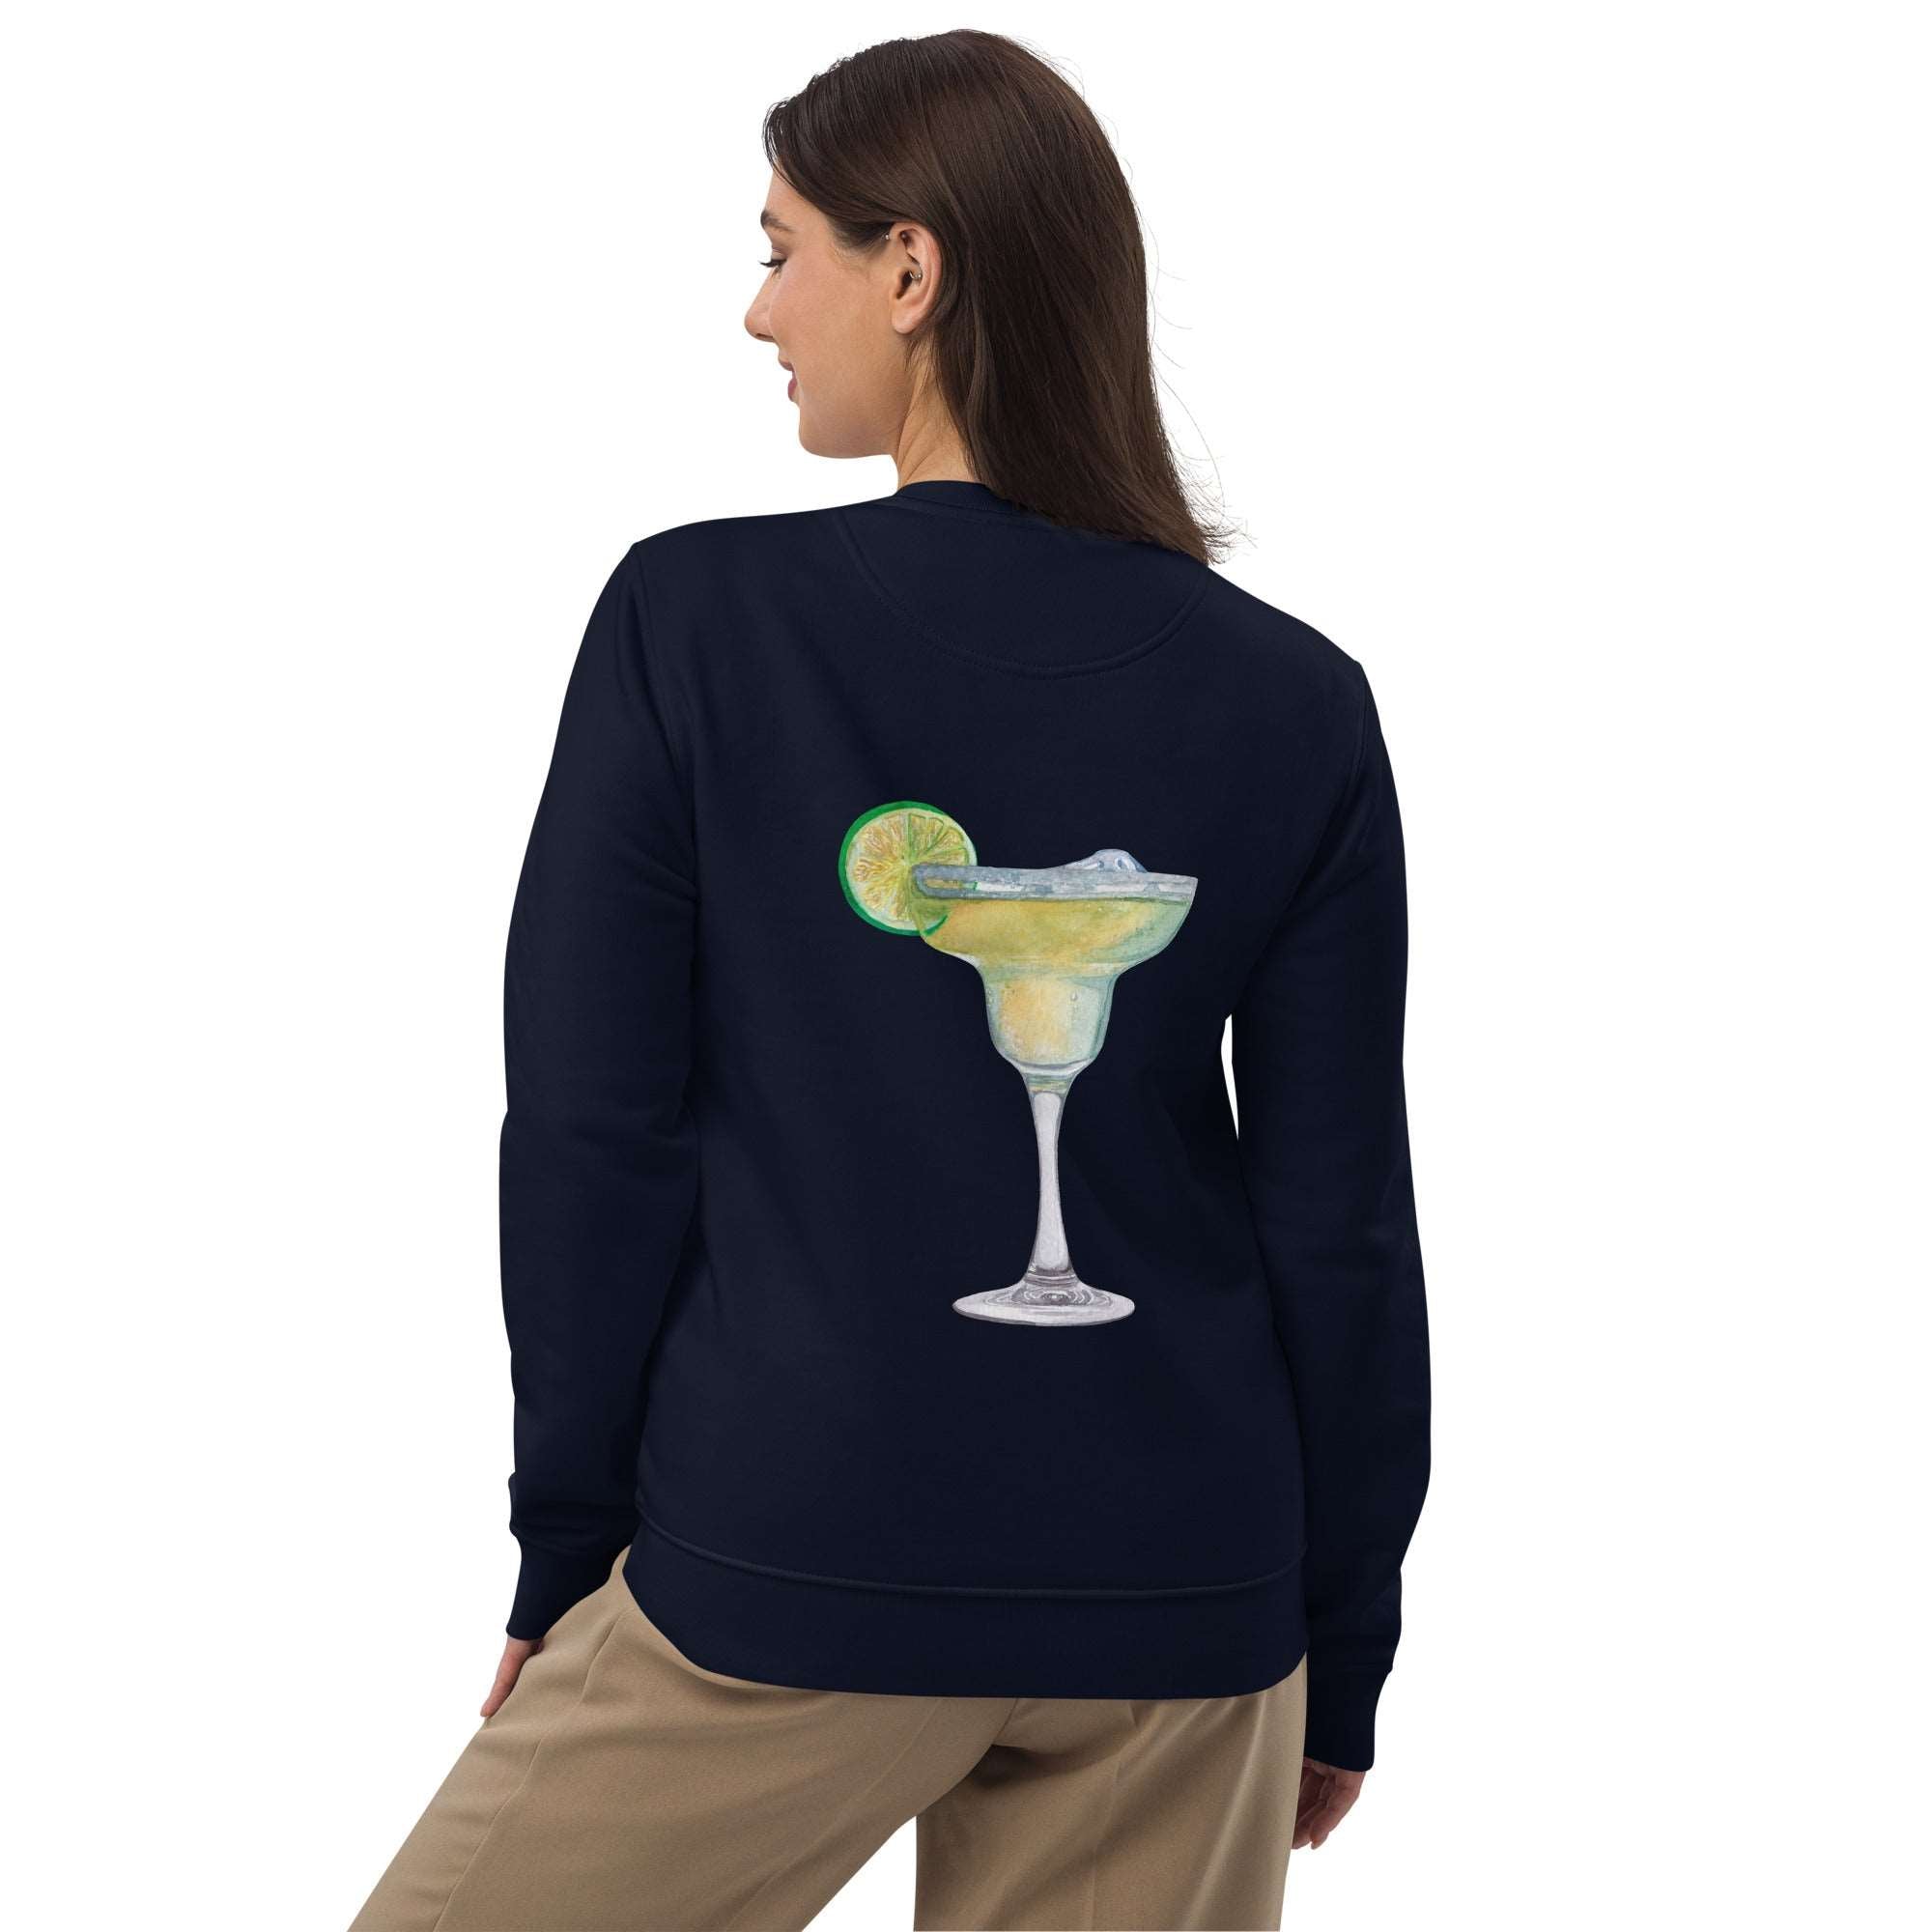 The Margarita Club - Organic Embroidered Sweatshirt - The Refined Spirit